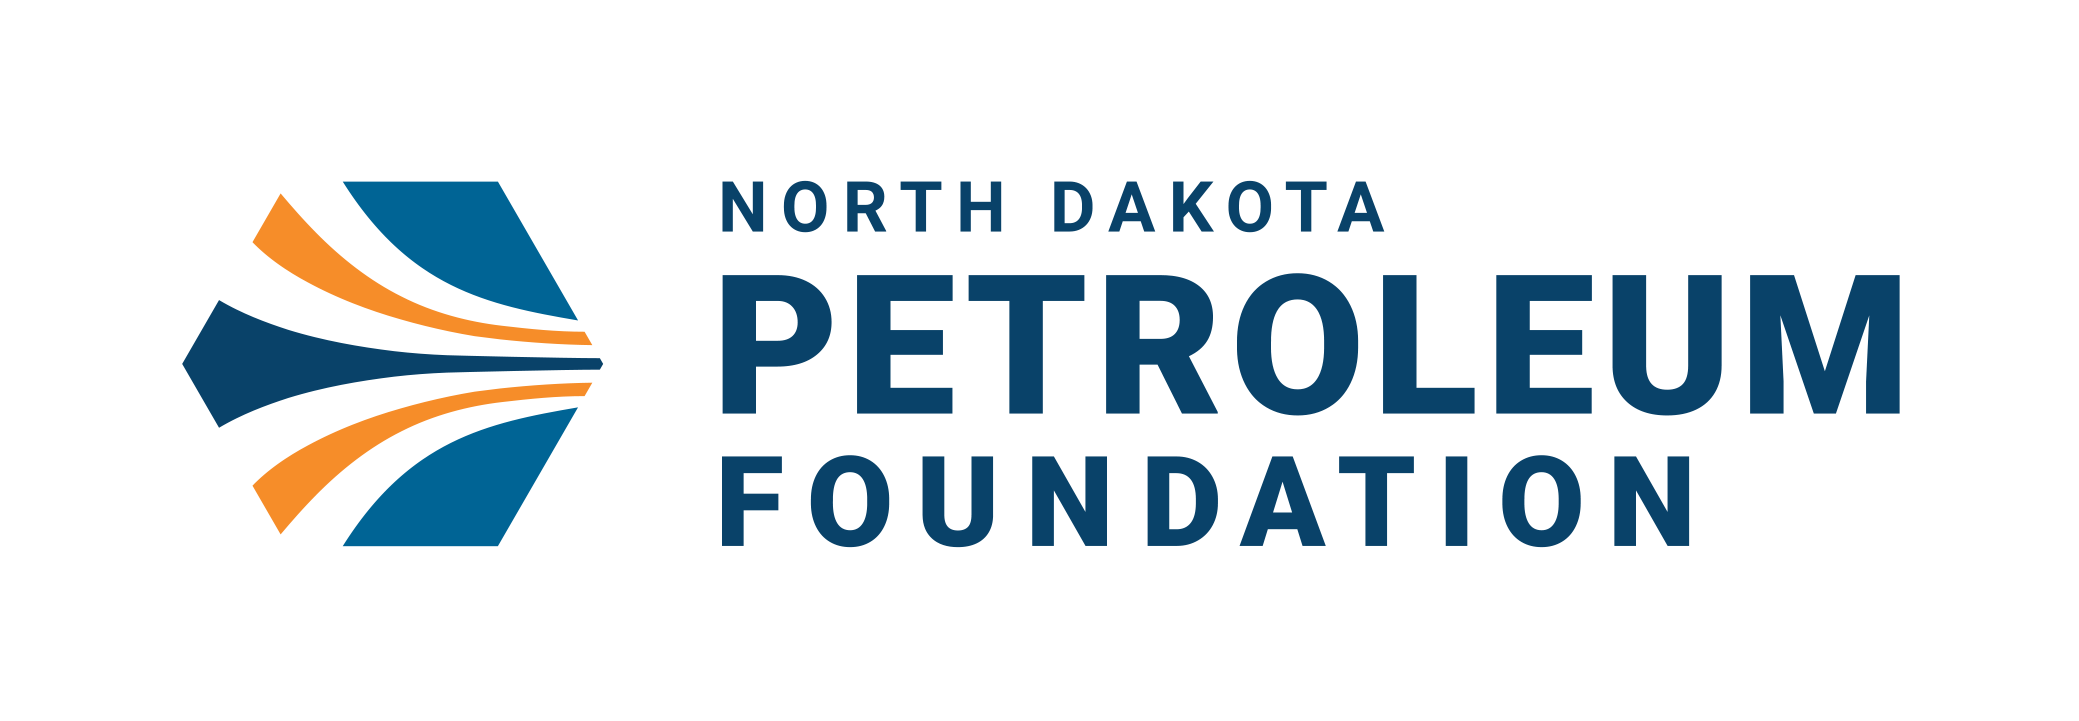 North Dakota Petroleum Foundation